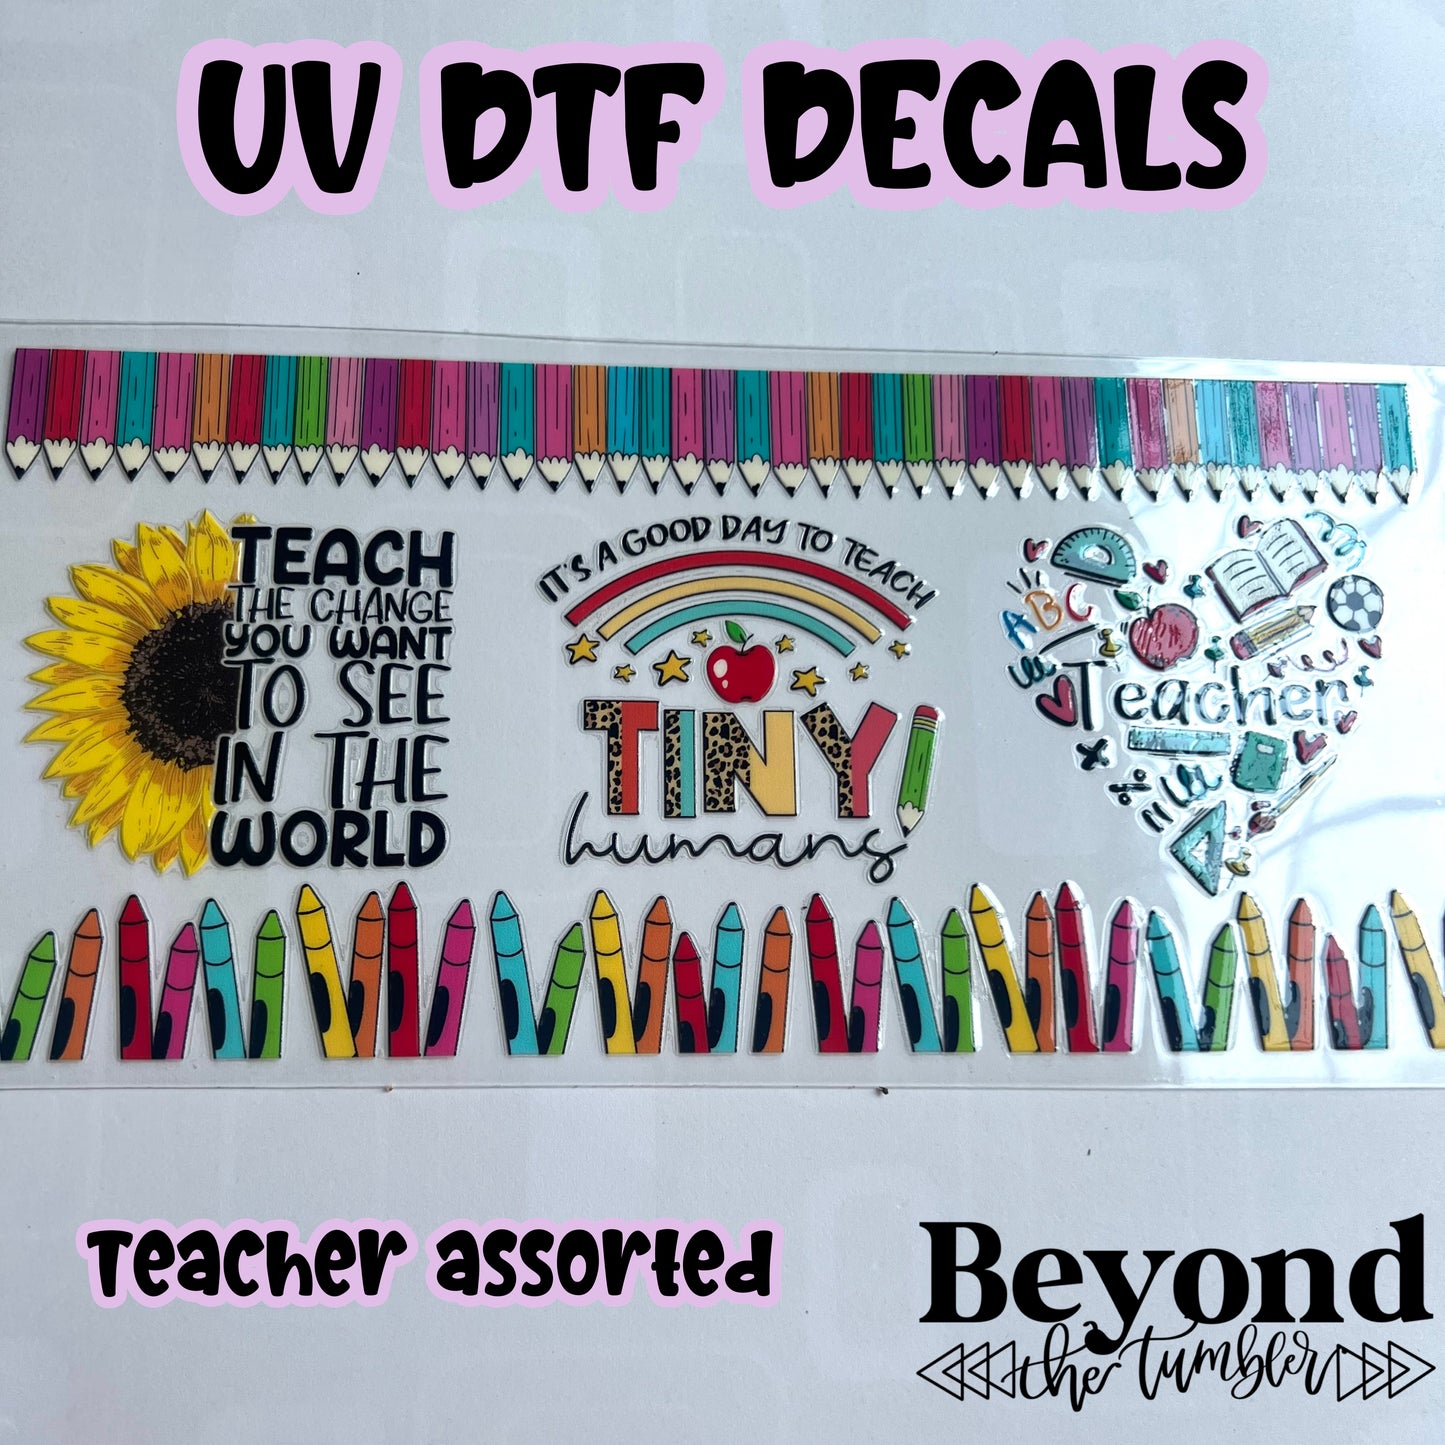 Teacher assorted UVDTF Decals